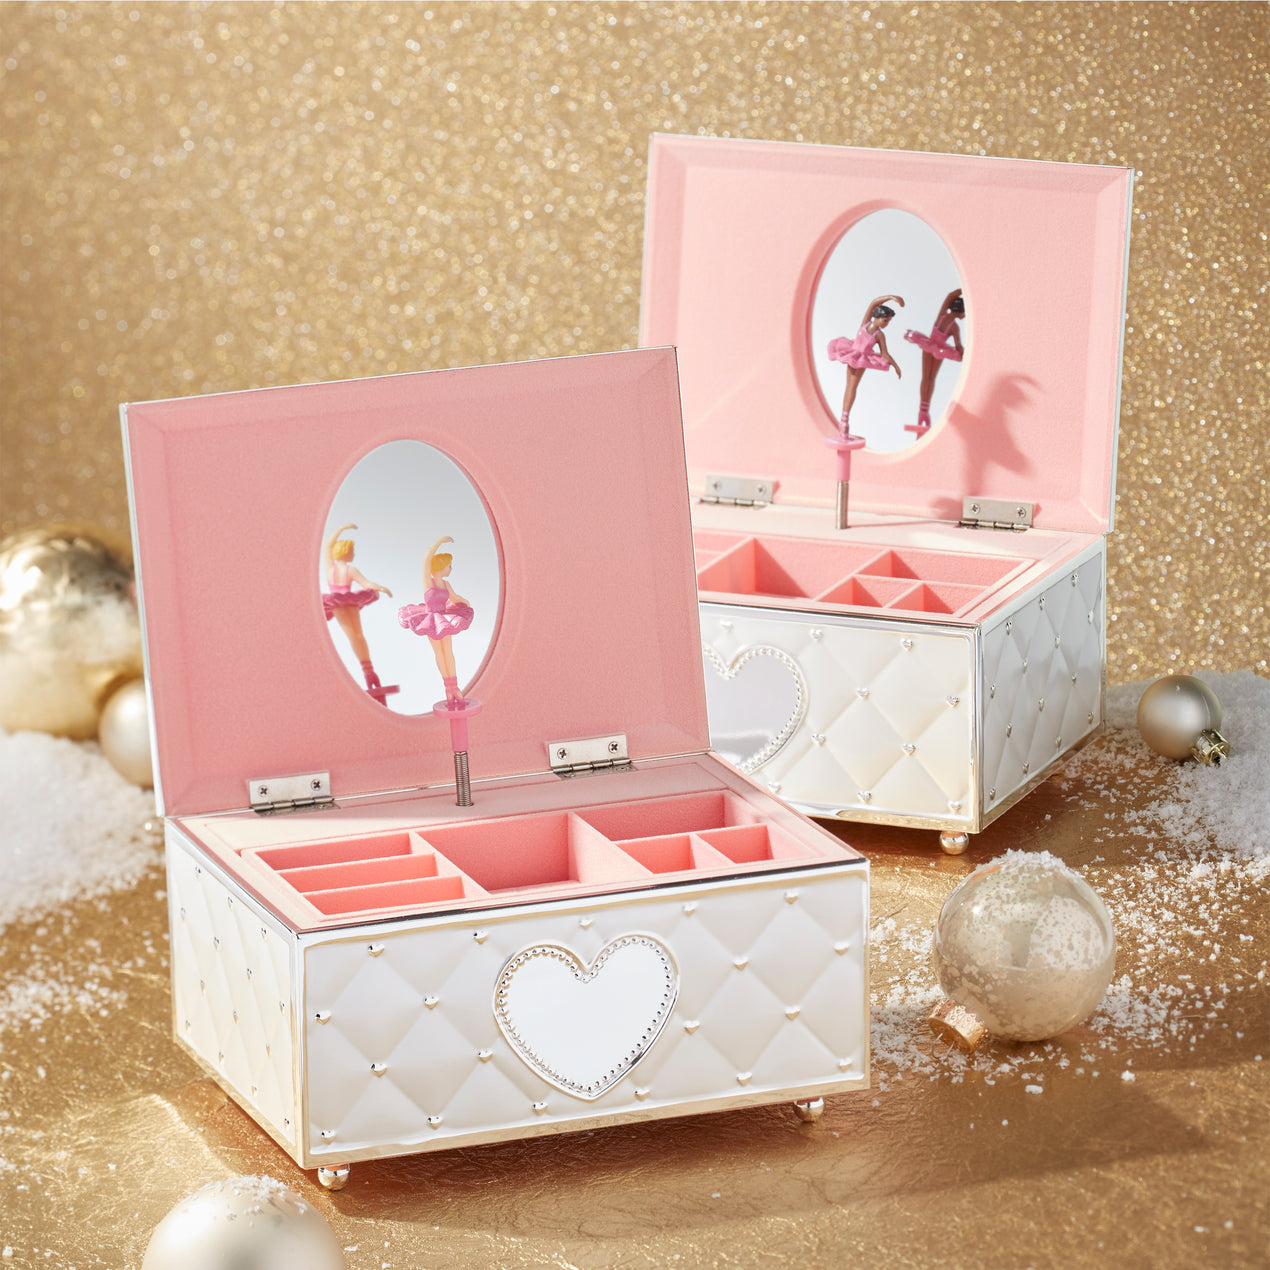 SONGMICS Ballerina Music Jewelry Box for Little Girls White